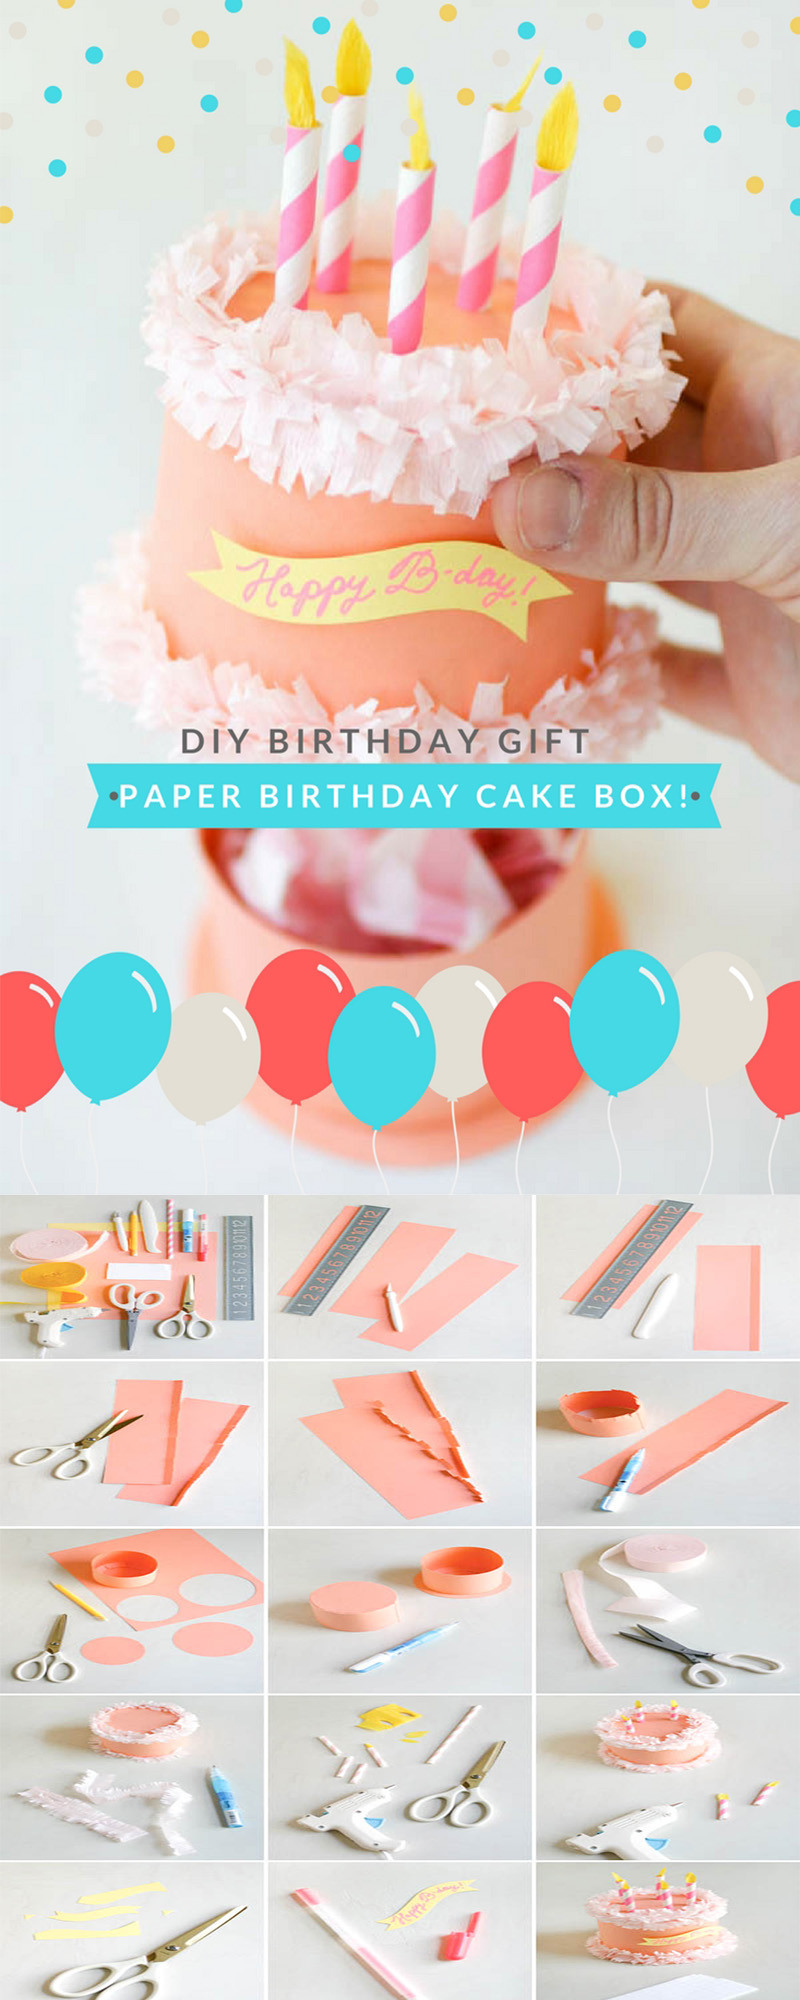 DIY Gifts For Birthday
 DIY Gift Ideas for Your Boyfriend Paper Birthday Cake Box